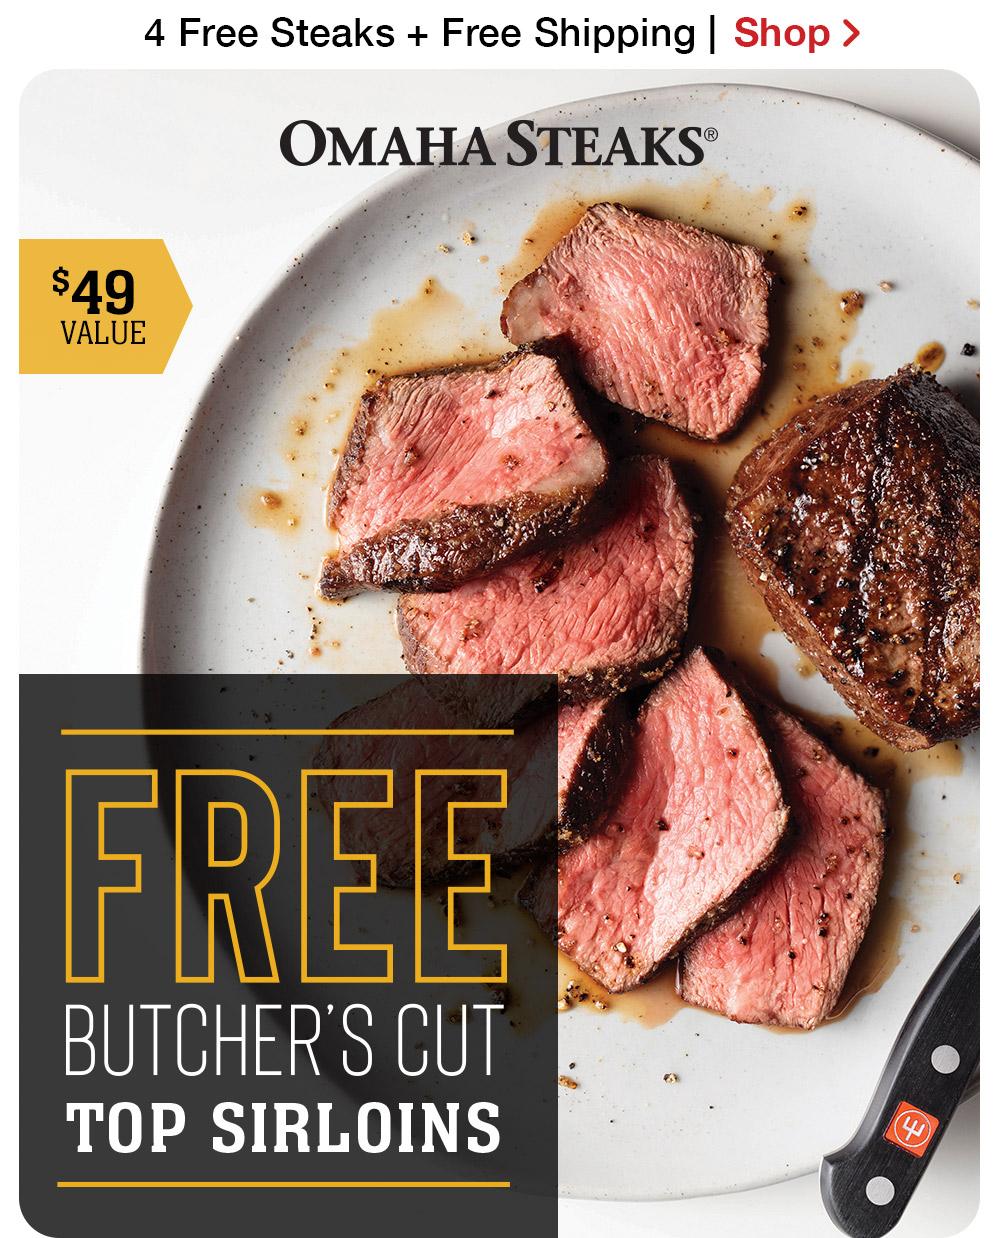 4 Free Steaks + Free Shipping | Shop > |  OMAHA STEAKS® $49 VALUE FREE BUTCHER'S CUT TOP SIRLOINS || Shop Now